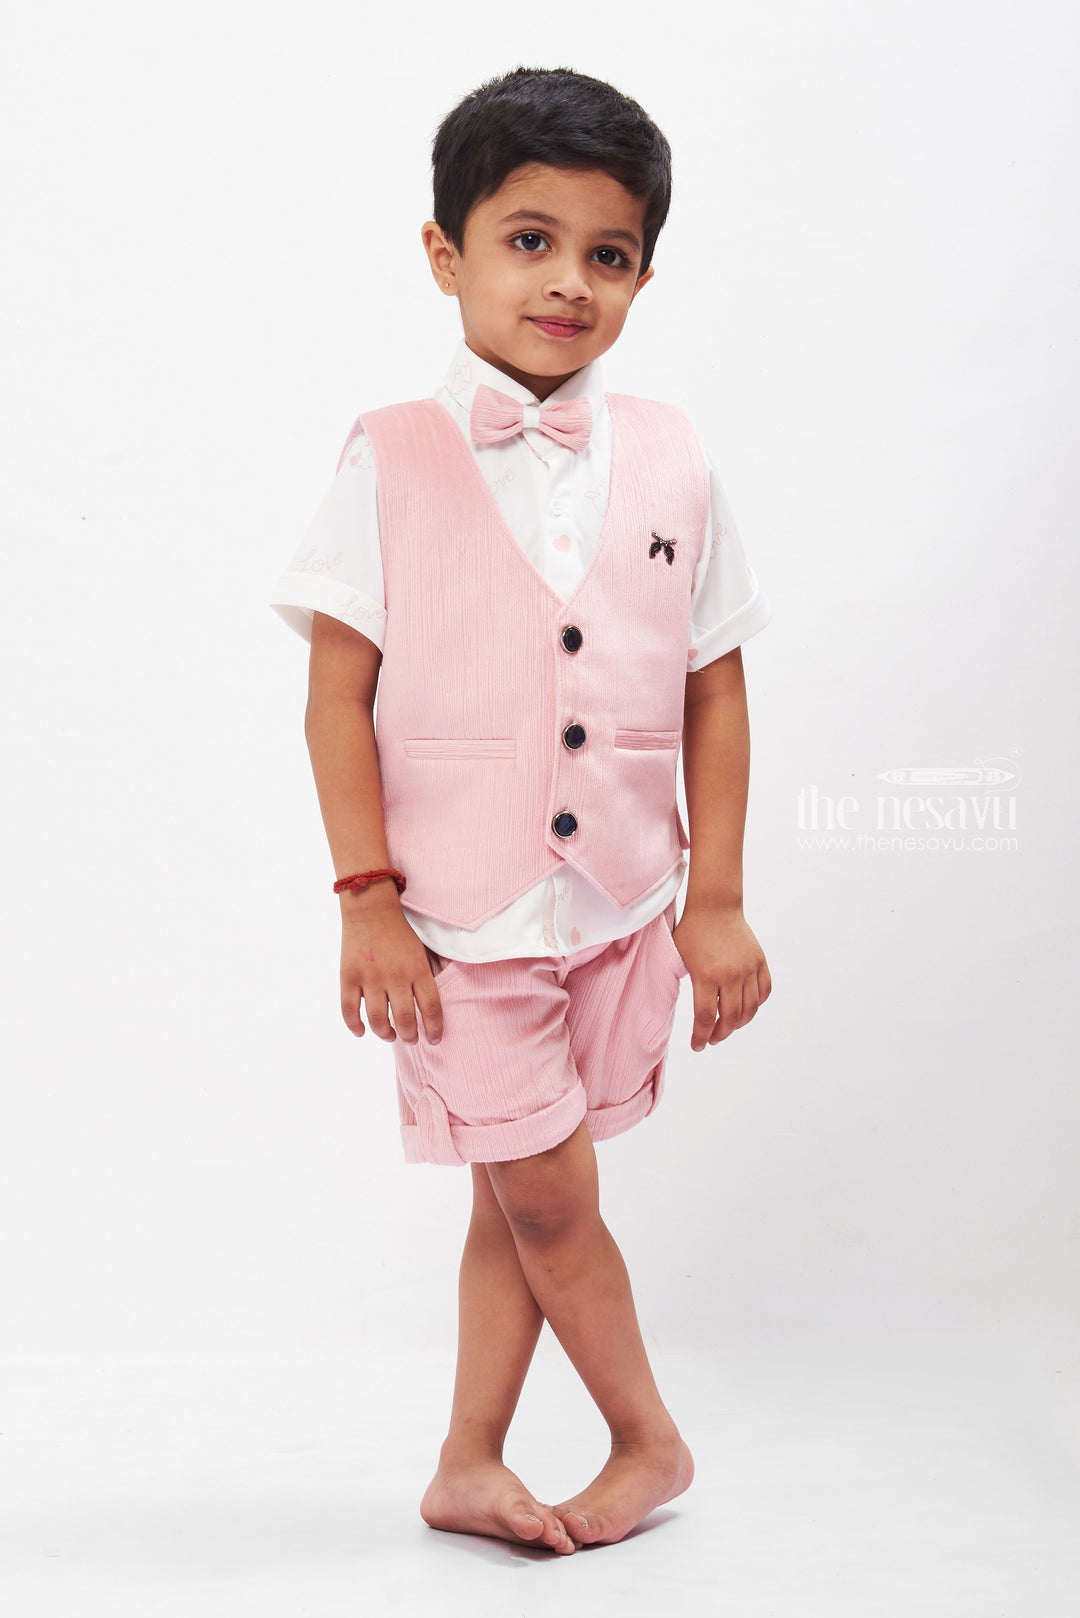 The Nesavu Boys Pink Shirt and Shorts Set with Tailored Overcoat - Toddler Elegance Nesavu 12 (3M) / Pink / Knit Fabric BCS003A-12 Boys Pink Shirt Overcoat Set with Shorts | Stylish Toddler Attire | The Nesavu